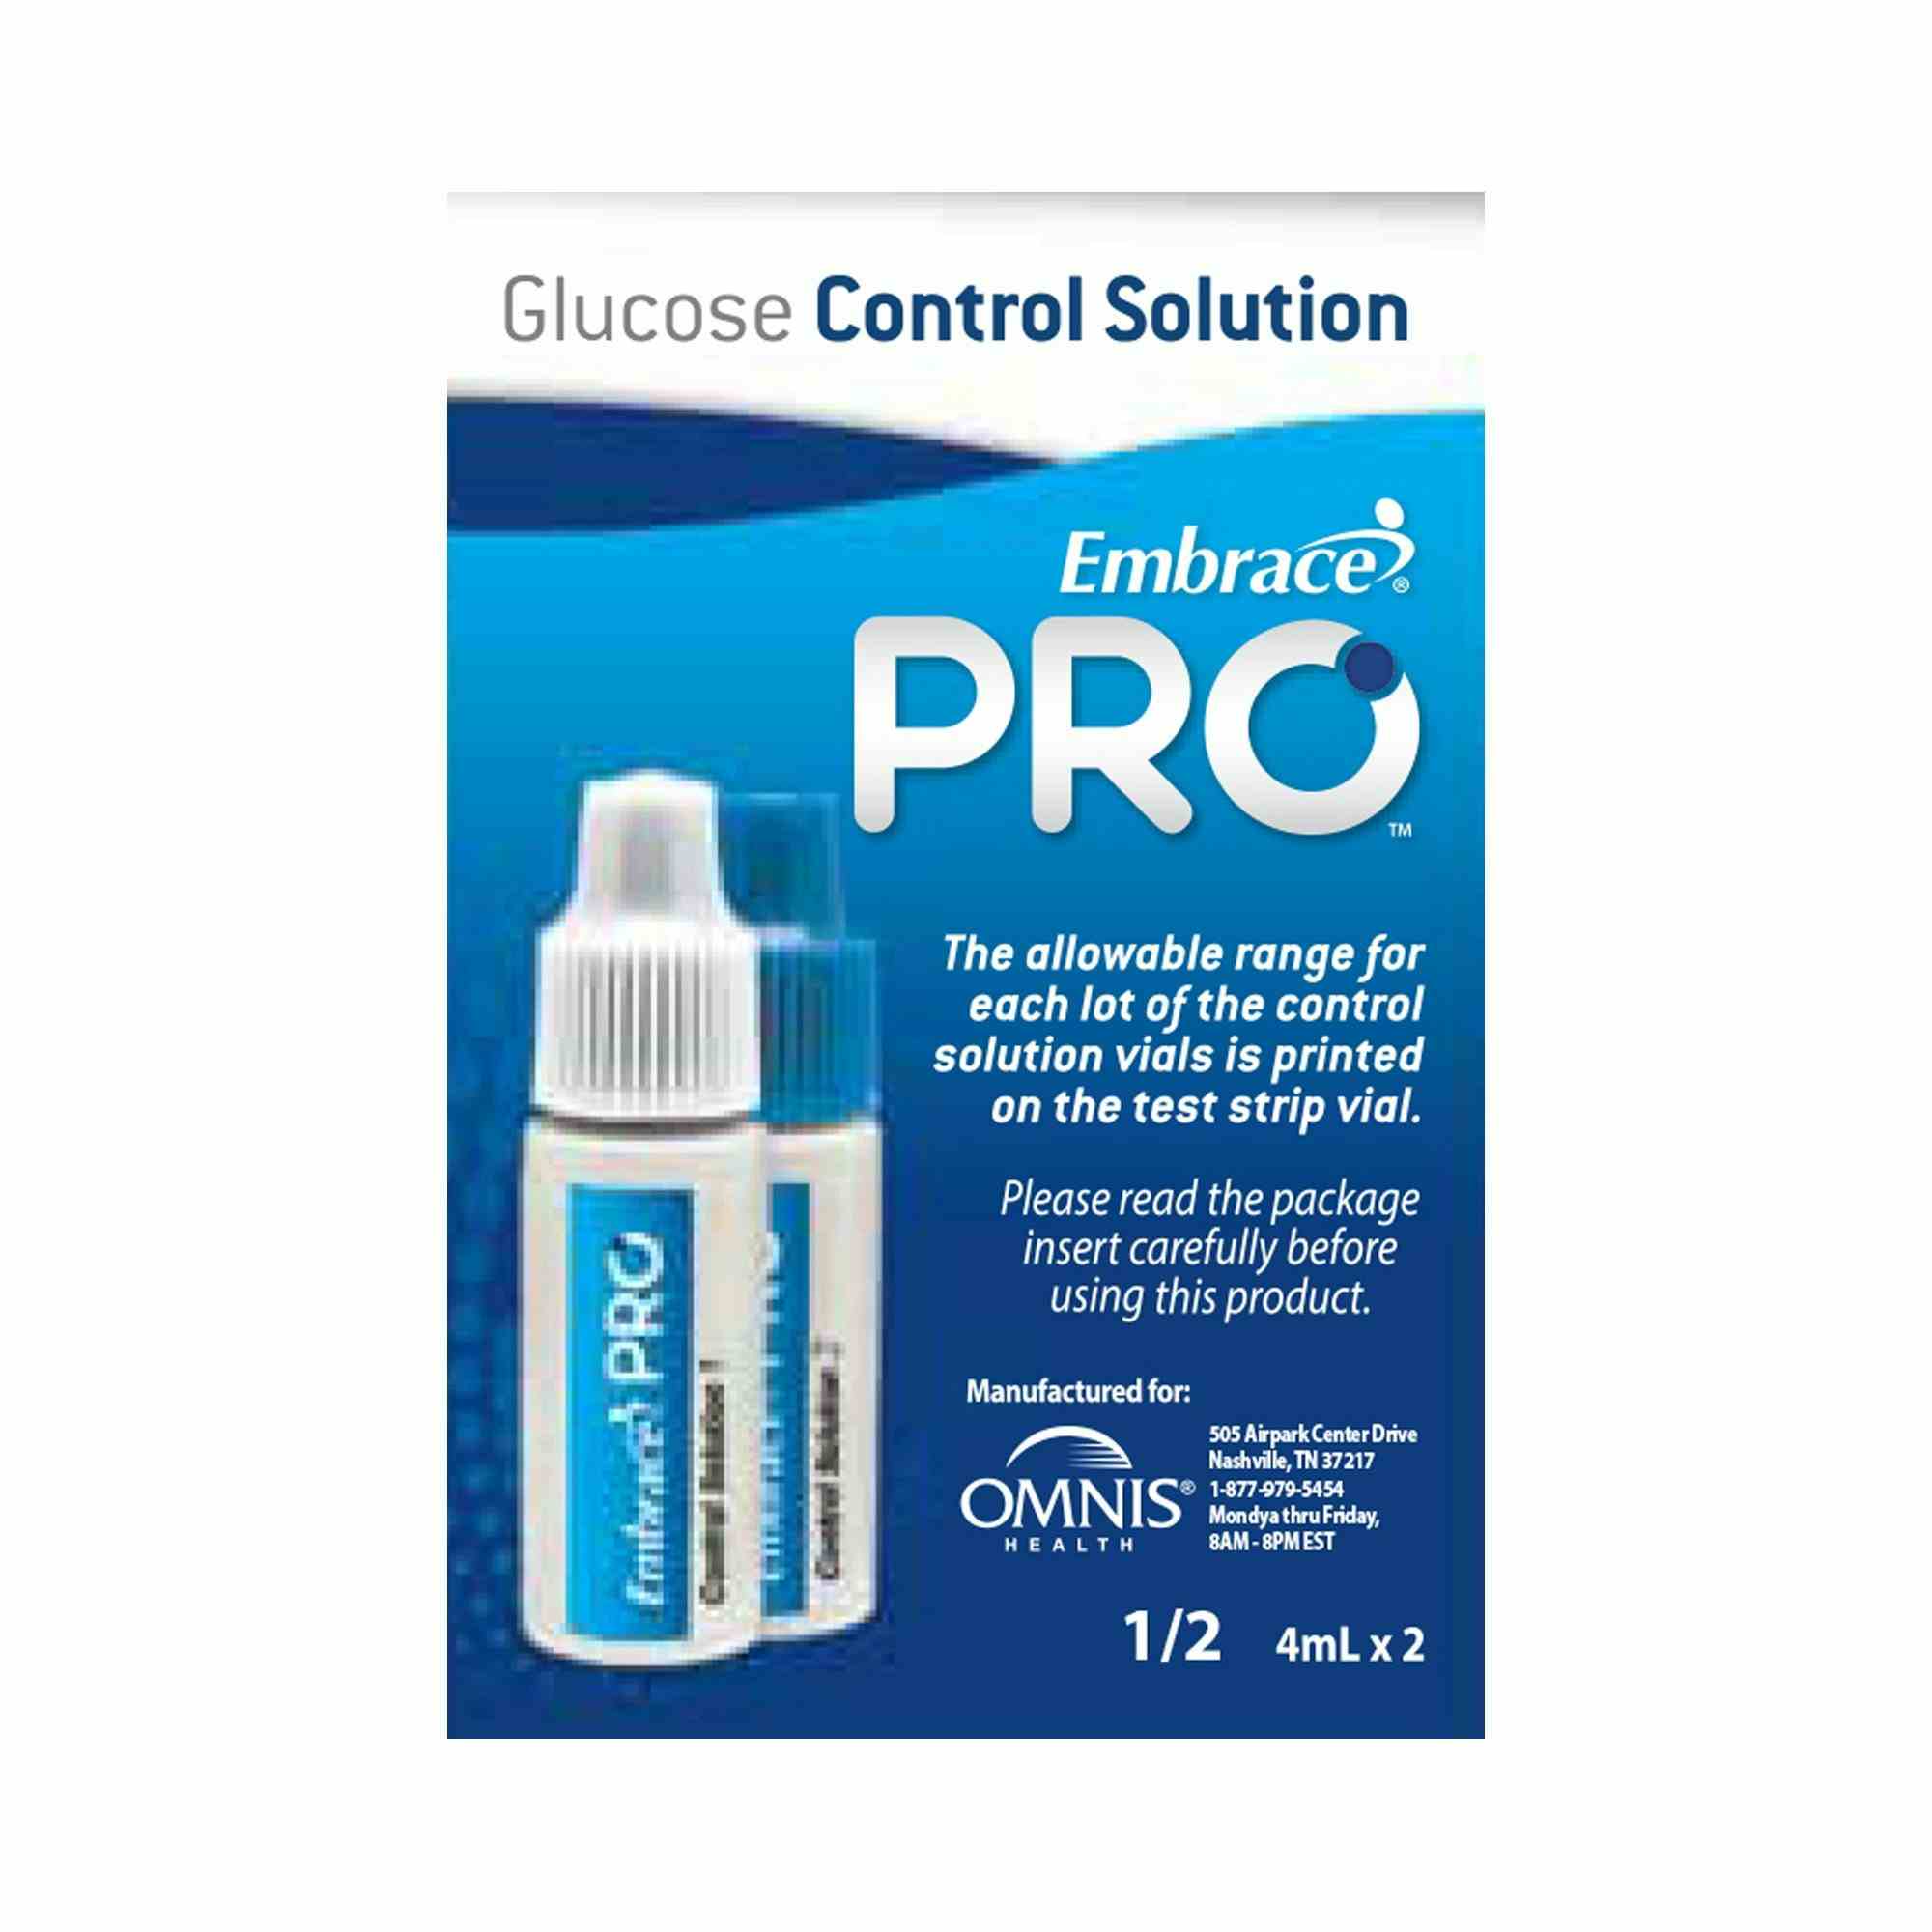 Embrace Pro Blood Glucose Control Solution, 4mL X 2, ALL02AM0210, 1 Box